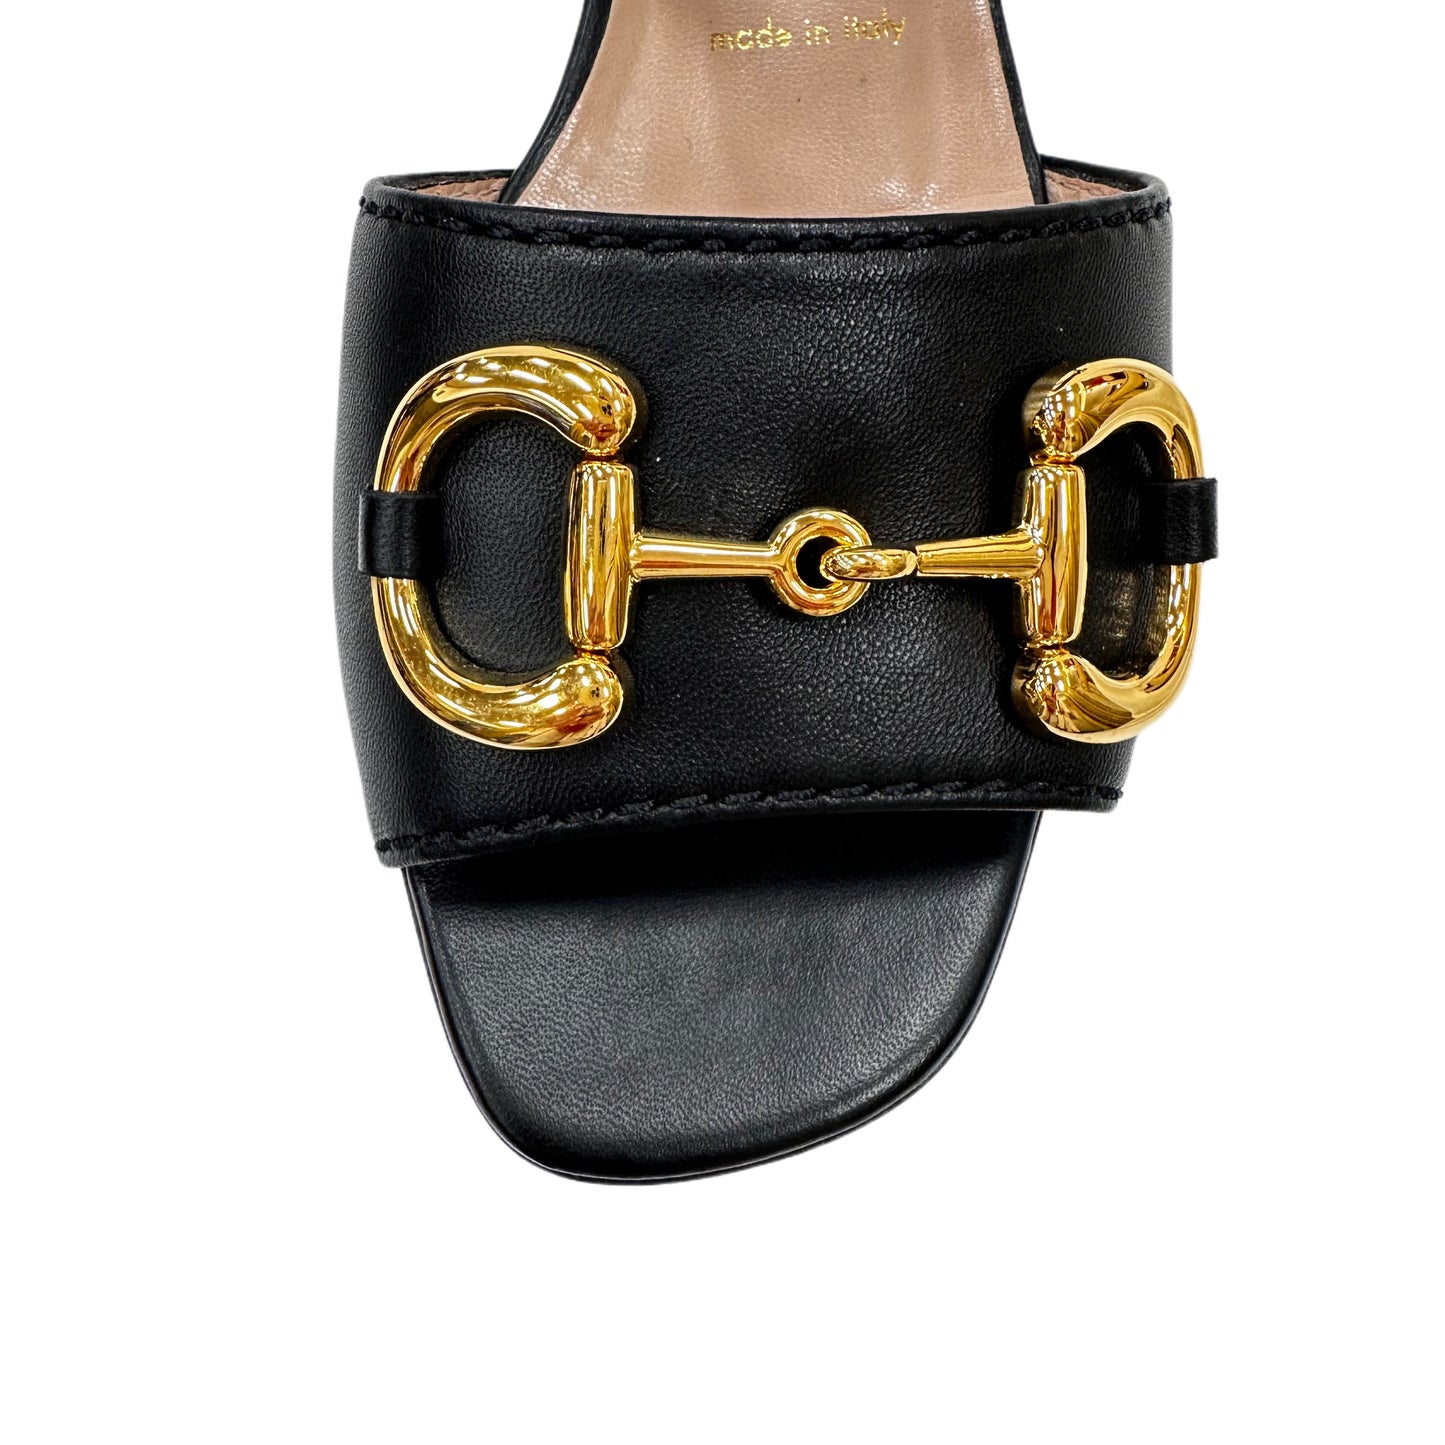 GUCCI Horsebit Leather Sandal, Size 37